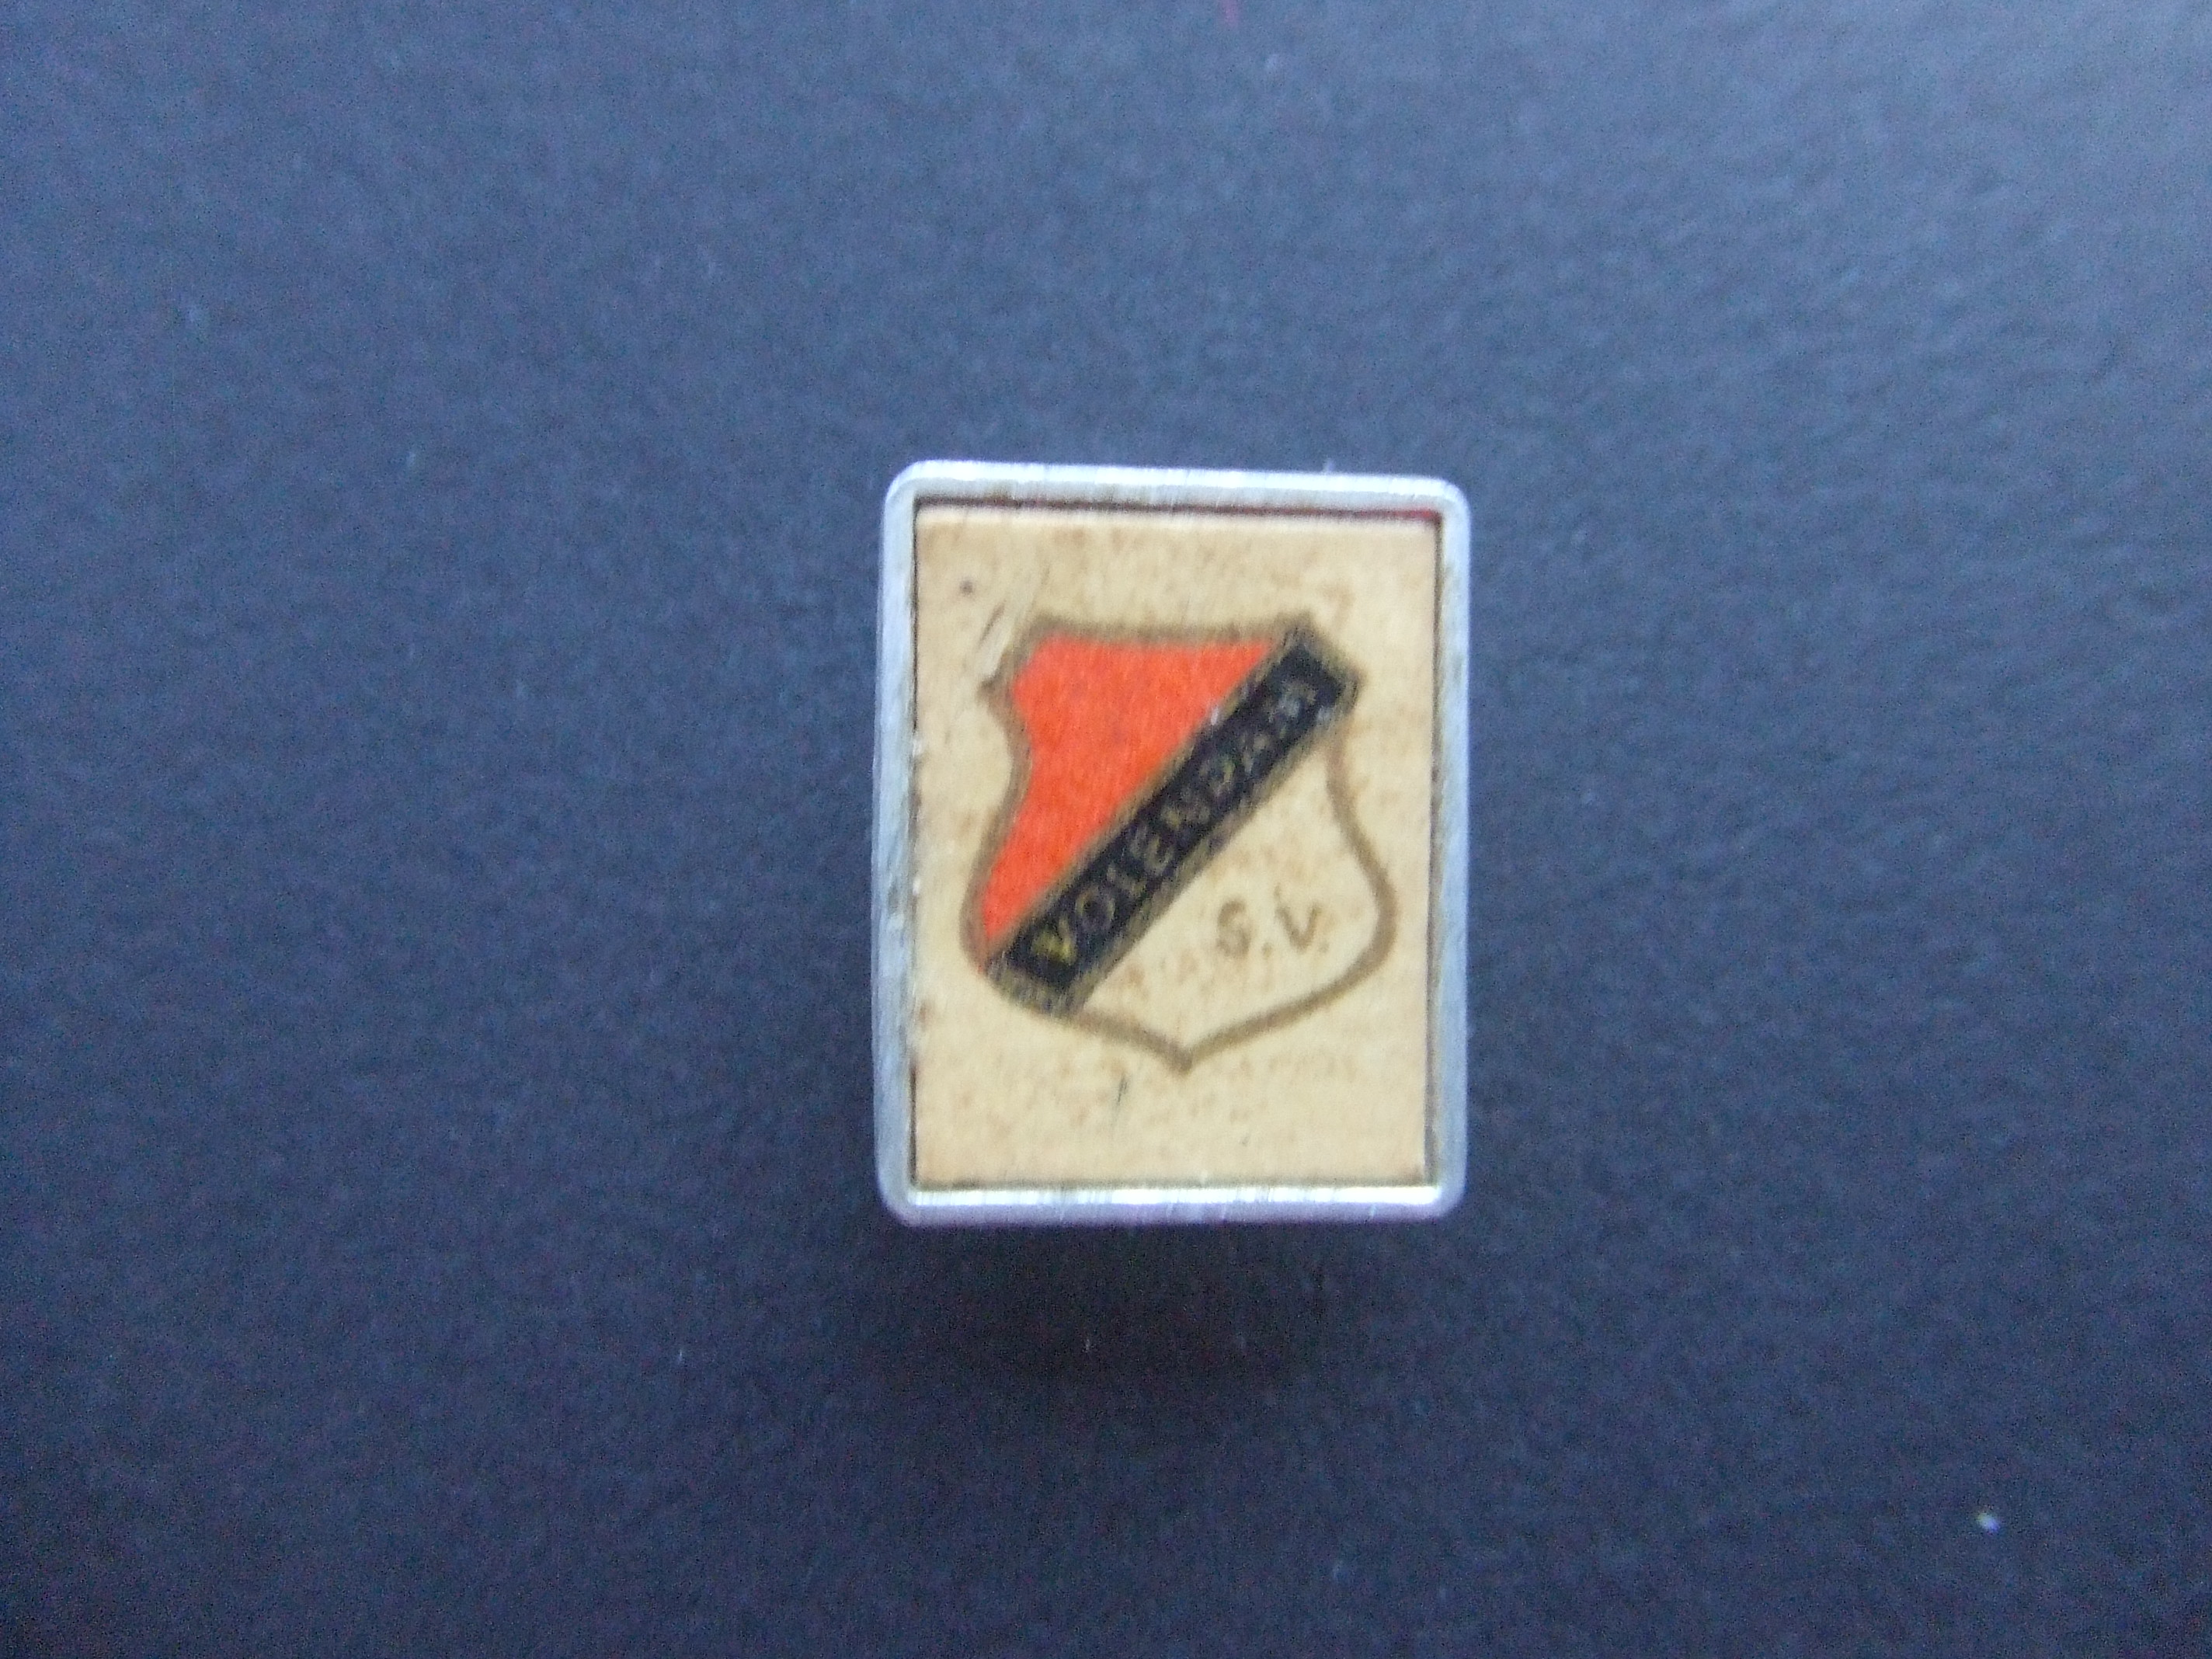 Volendam voetbalclub logo